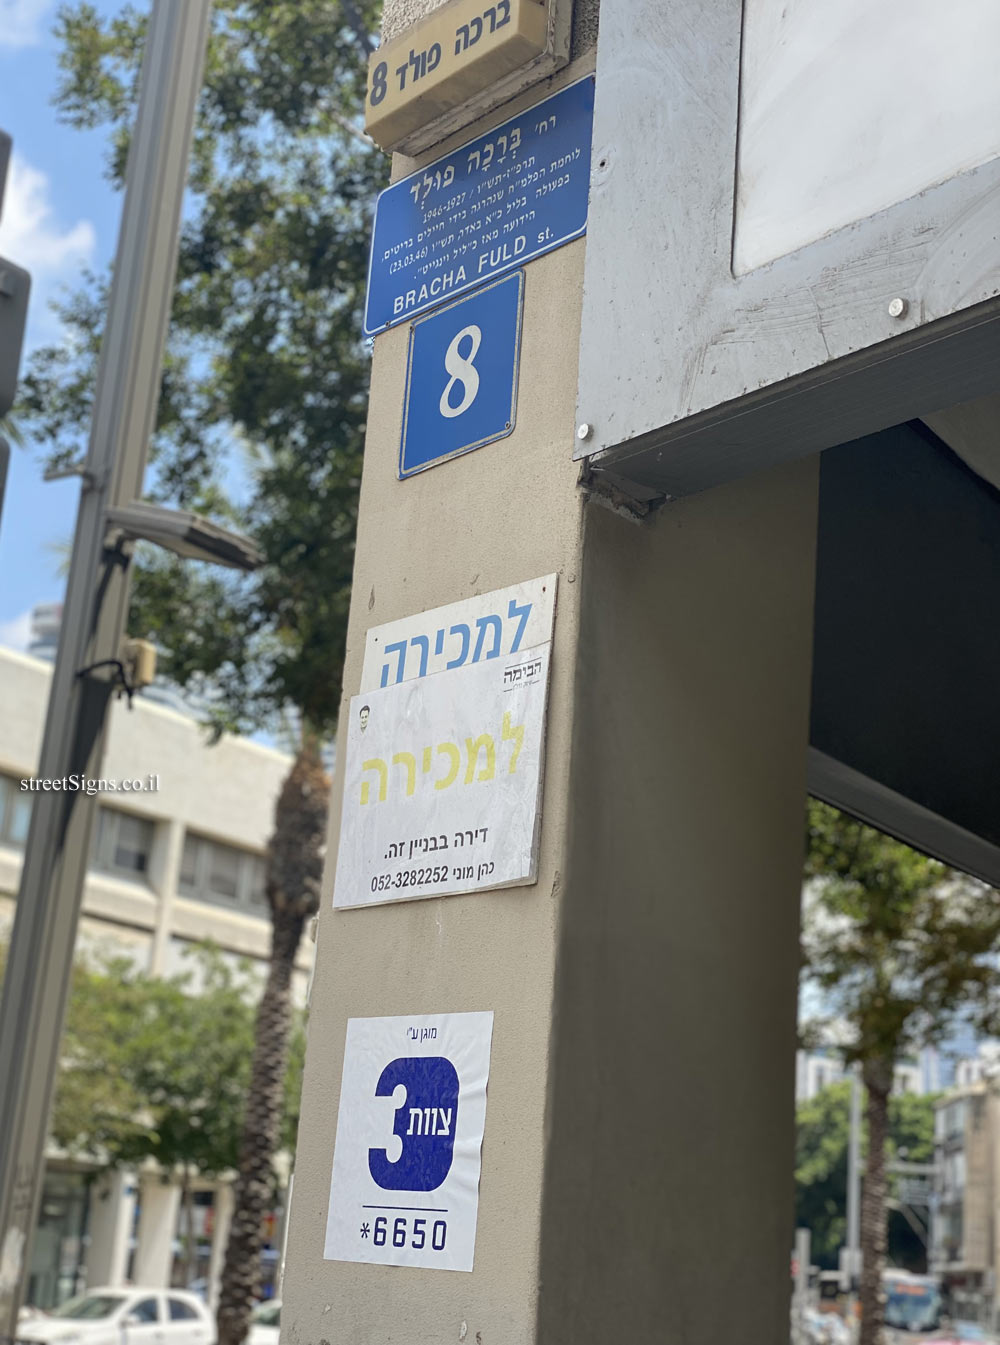 Brakha Fuld St 8, Tel Aviv-Yafo, Israel